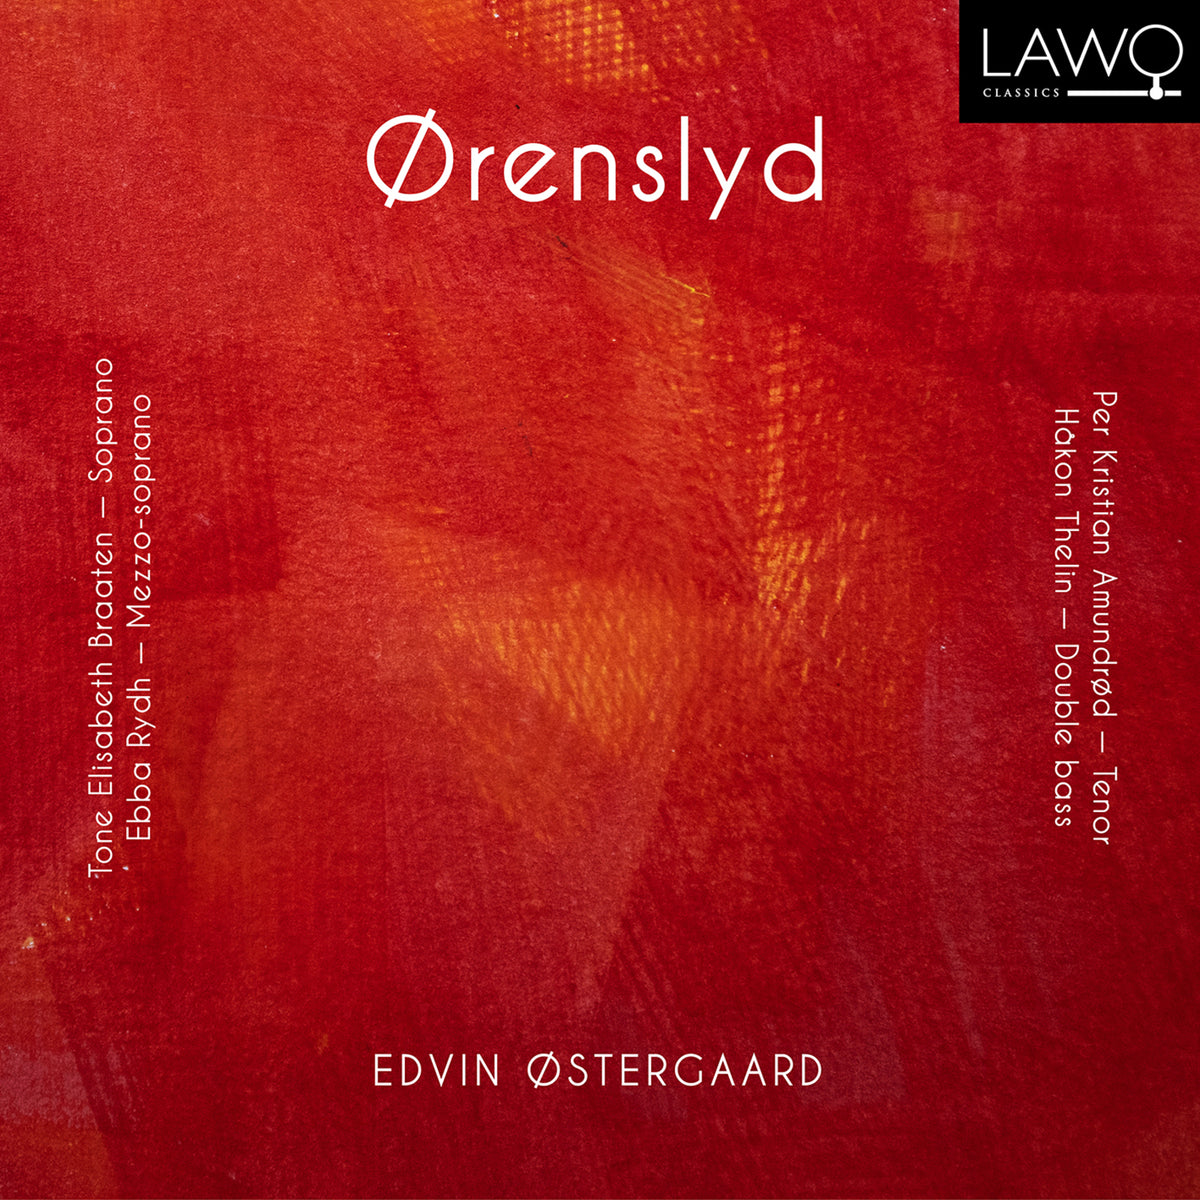 Tone Elisabeth Braaten (soprano), Ebba Rydh (mezzo-soprano), Per Kristian Amundrod (tenor), Hakon Thelin (double bass) - Edvin Ostergaard: Orenslyd - LWC1264